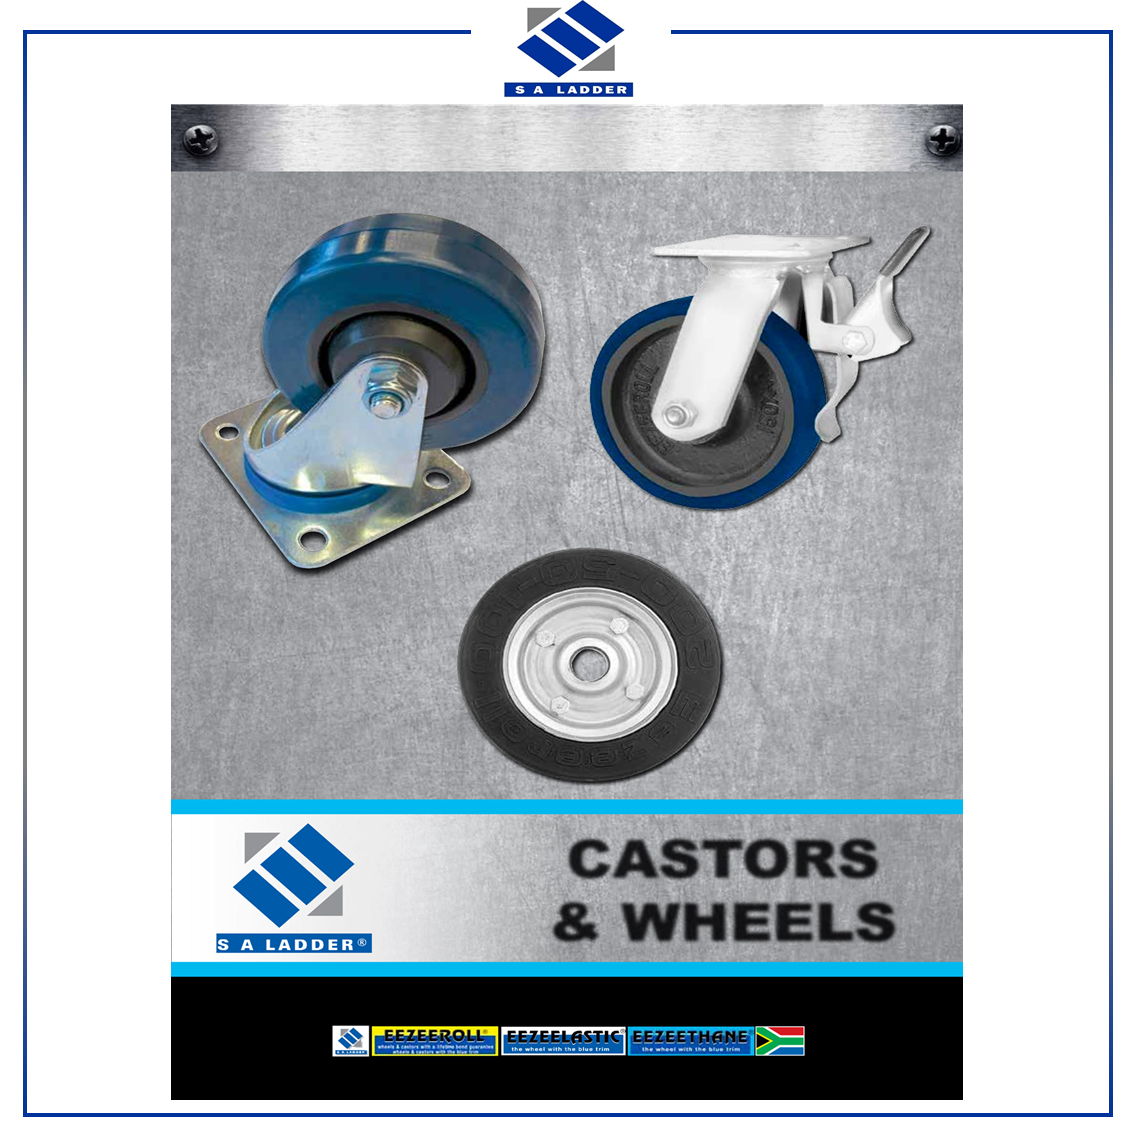 SA LADDER - Castors and Wheels Catalogue